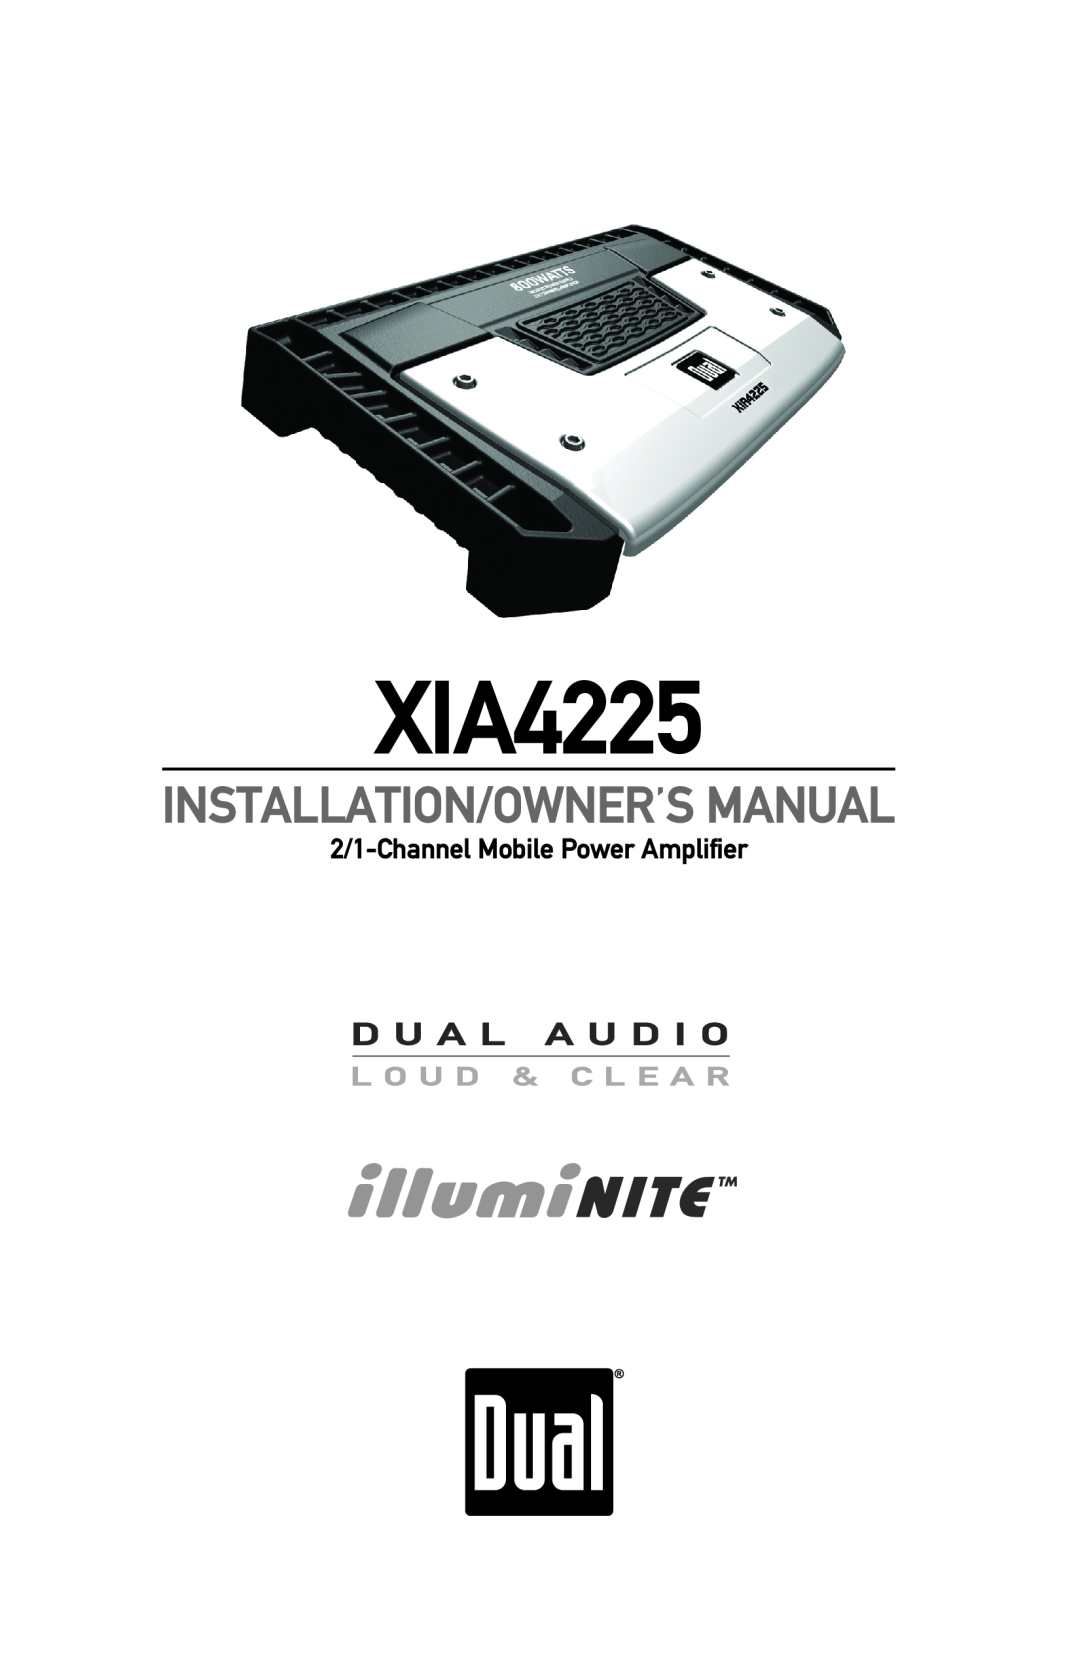 Dual XIA4225 owner manual Amplificador de Energía Móvil de Canal 2/1, Installation/Owner’S Manual 